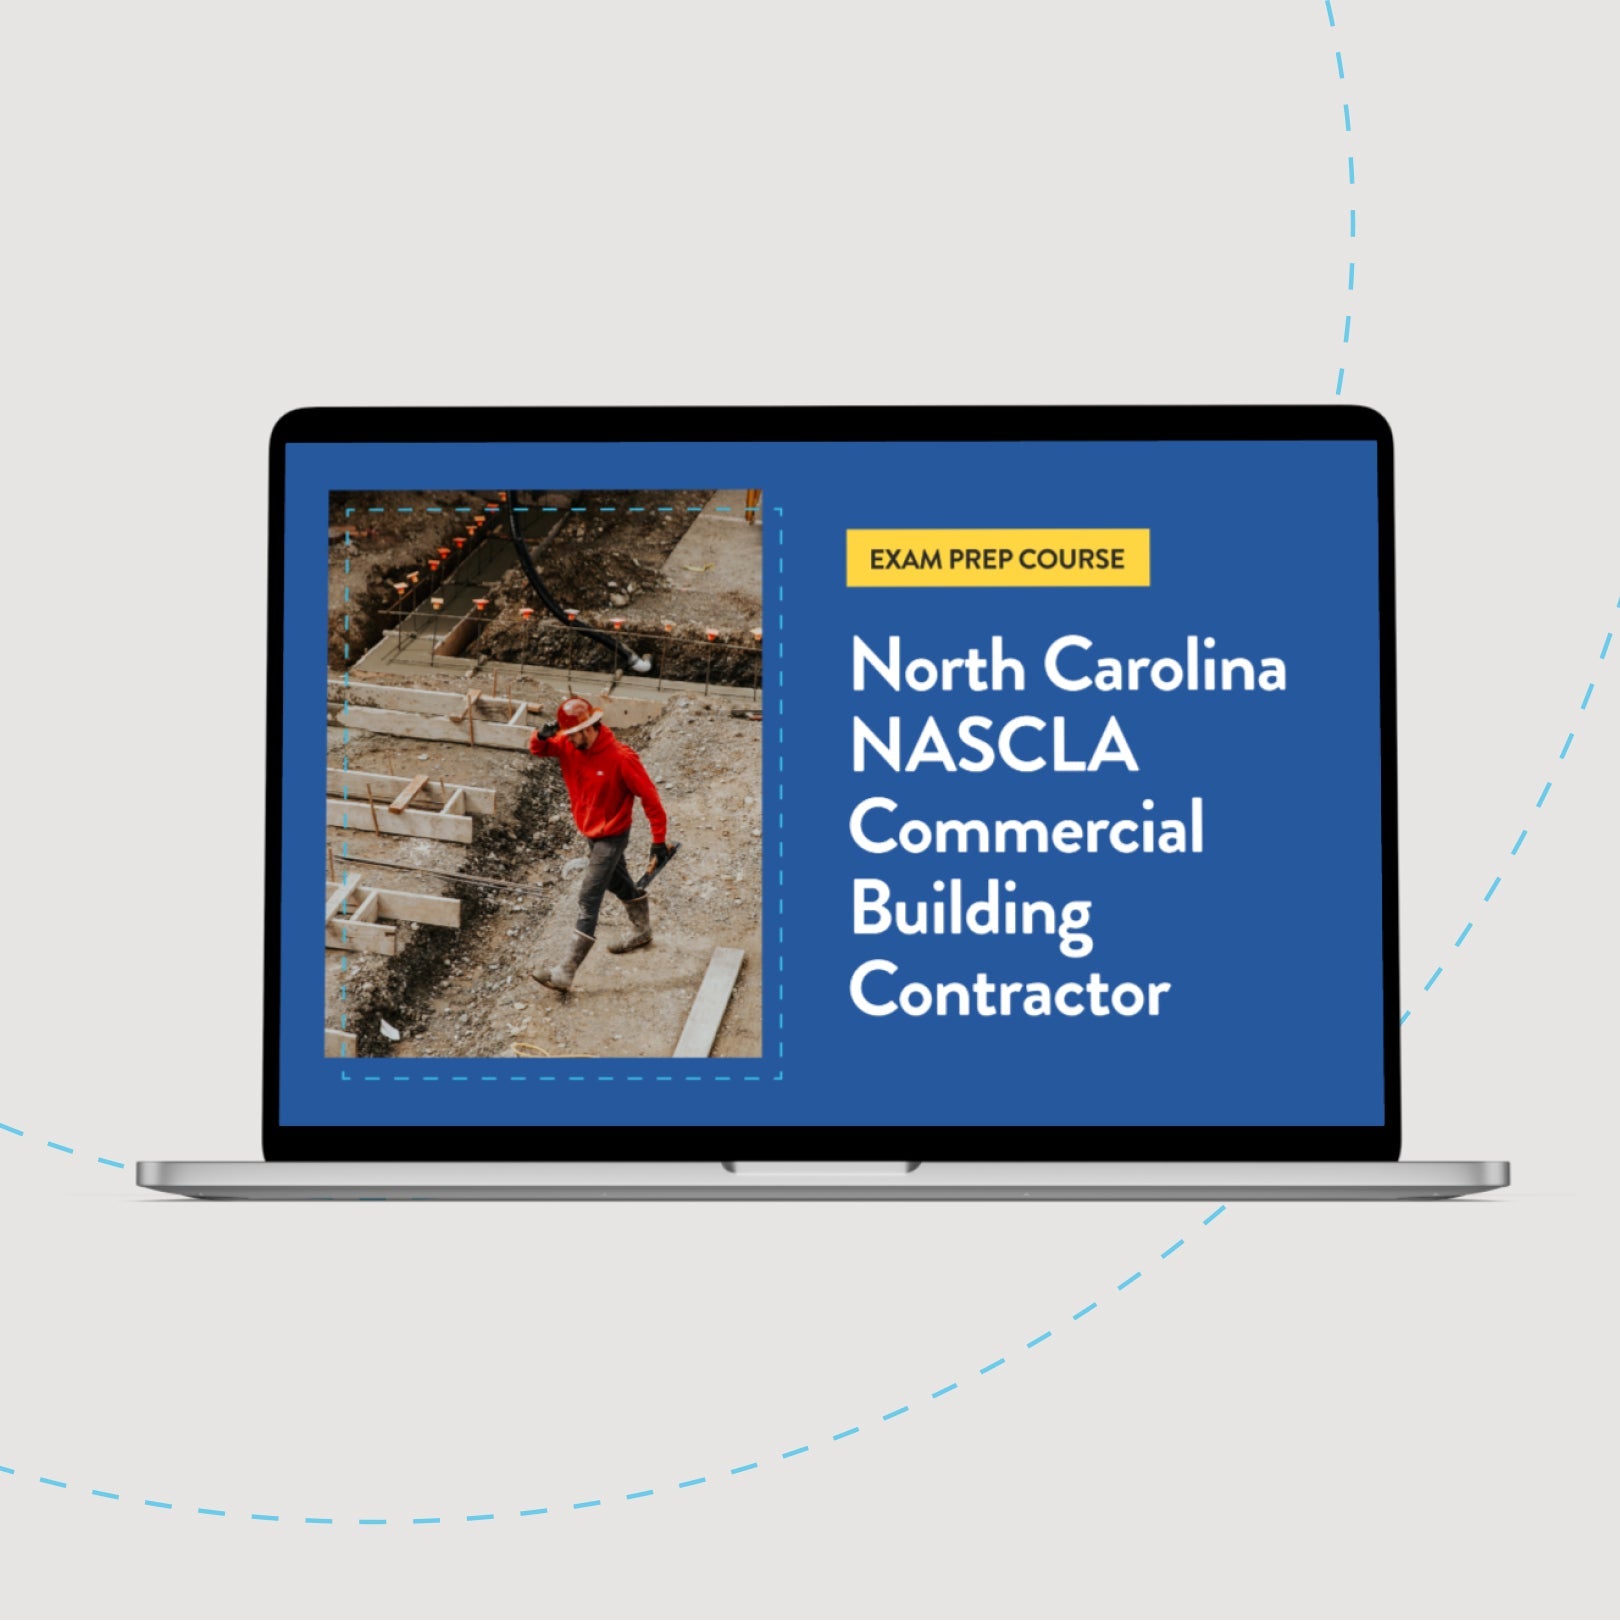 North Carolina NASCLA Commercial Building Contractor Exam Prep Course